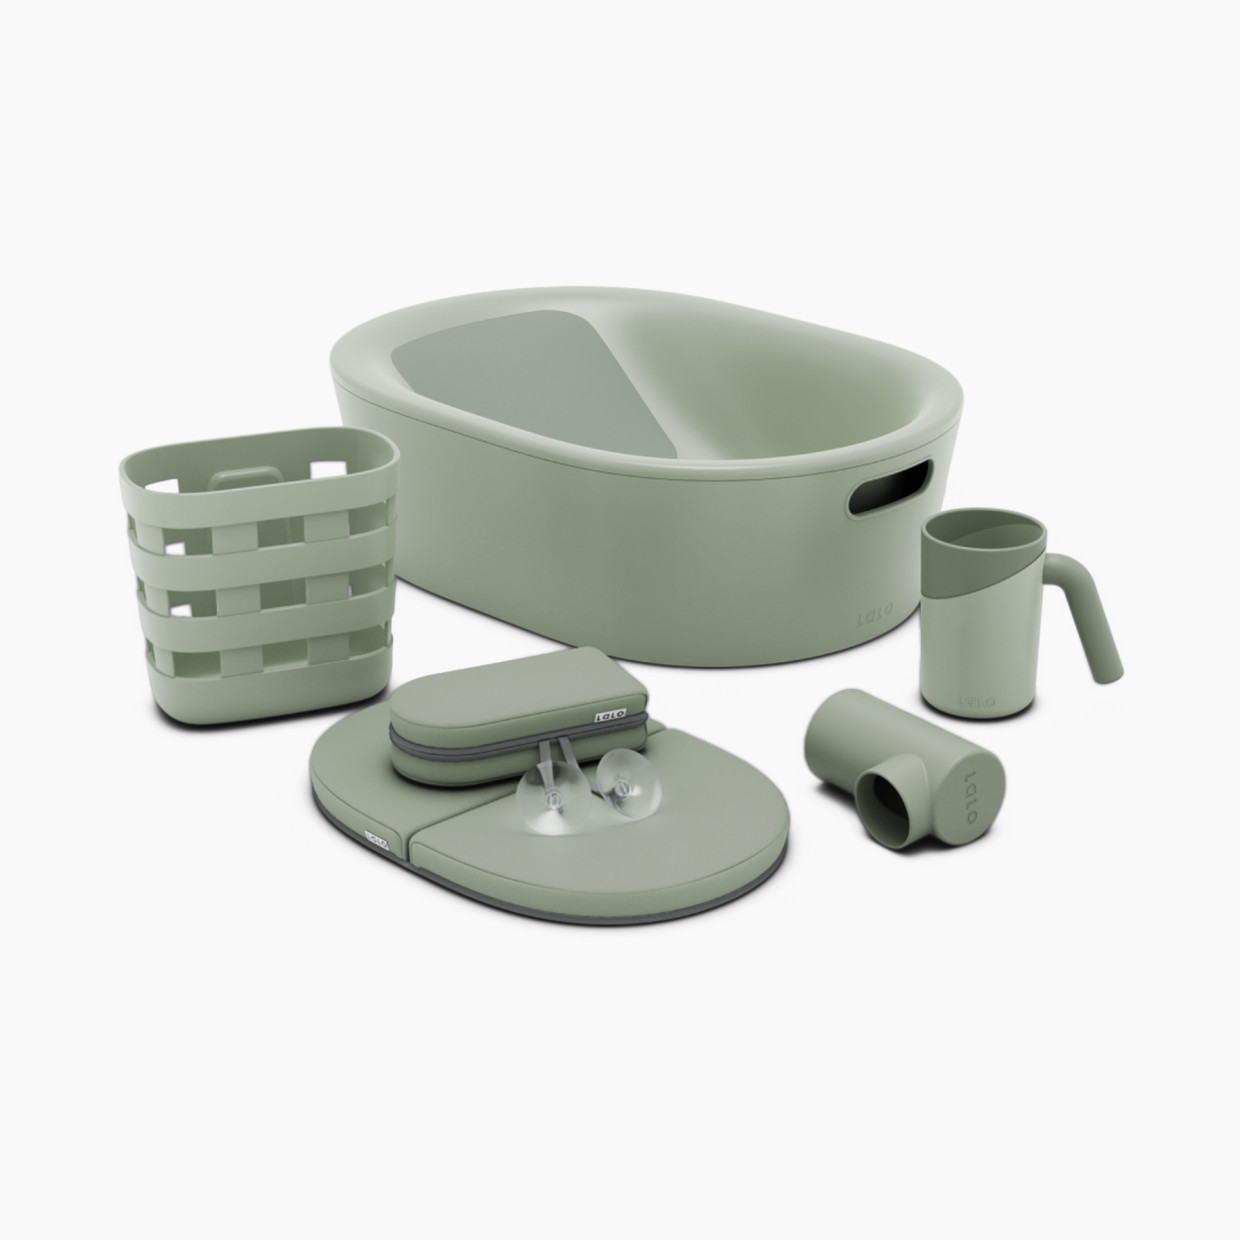 Lalo Bathtime Full Kit - Tub & Accessories - Sage.